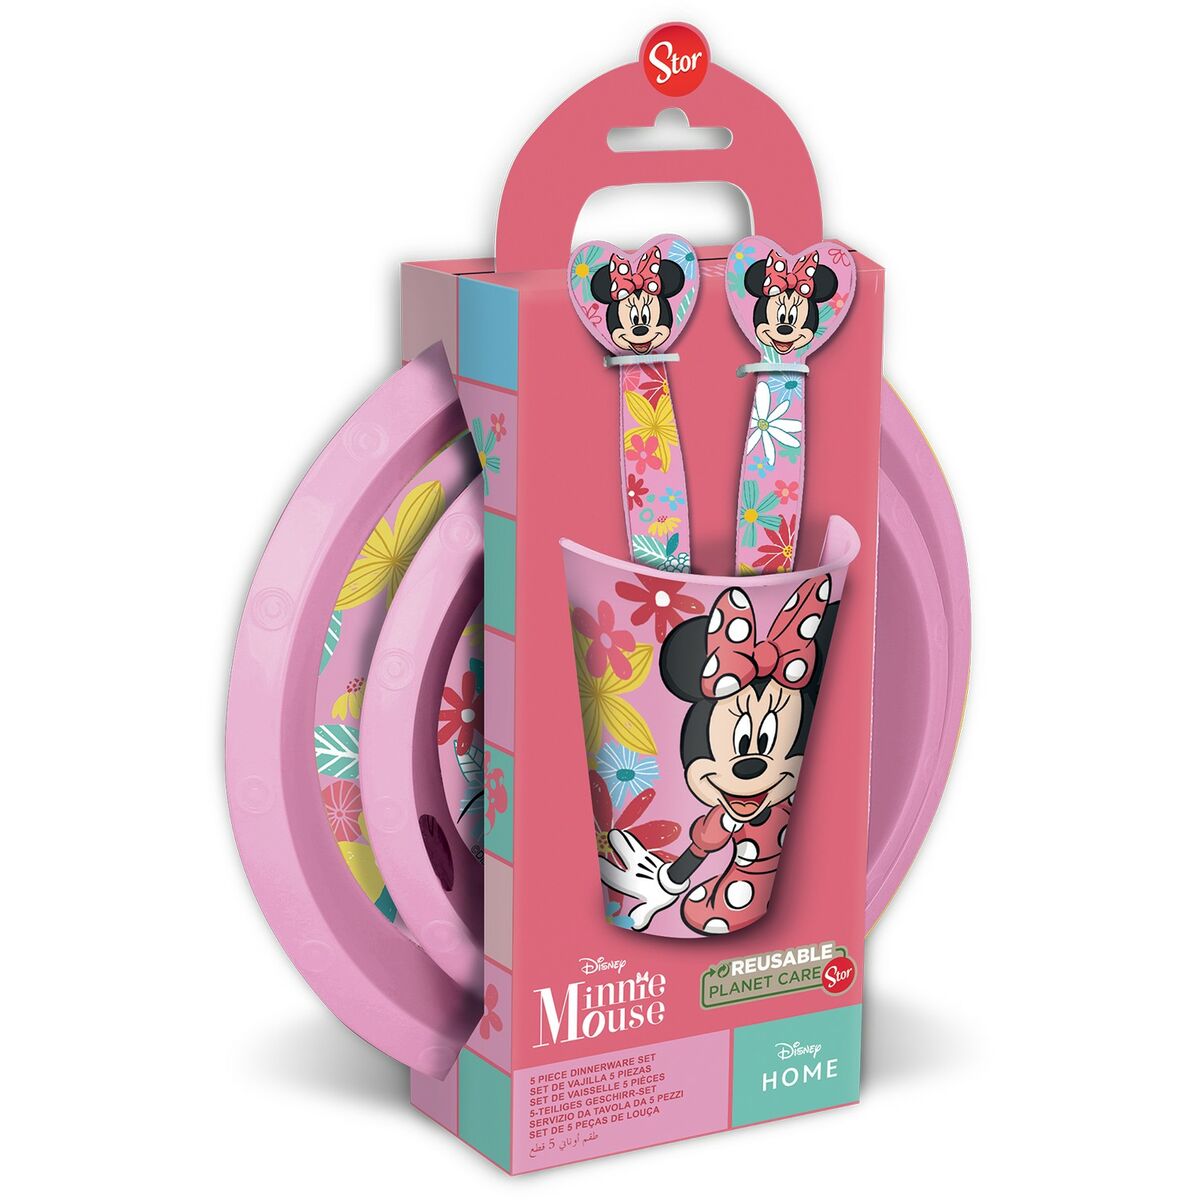 Children’s Dinner Set Minnie Mouse Pink 5 Pieces